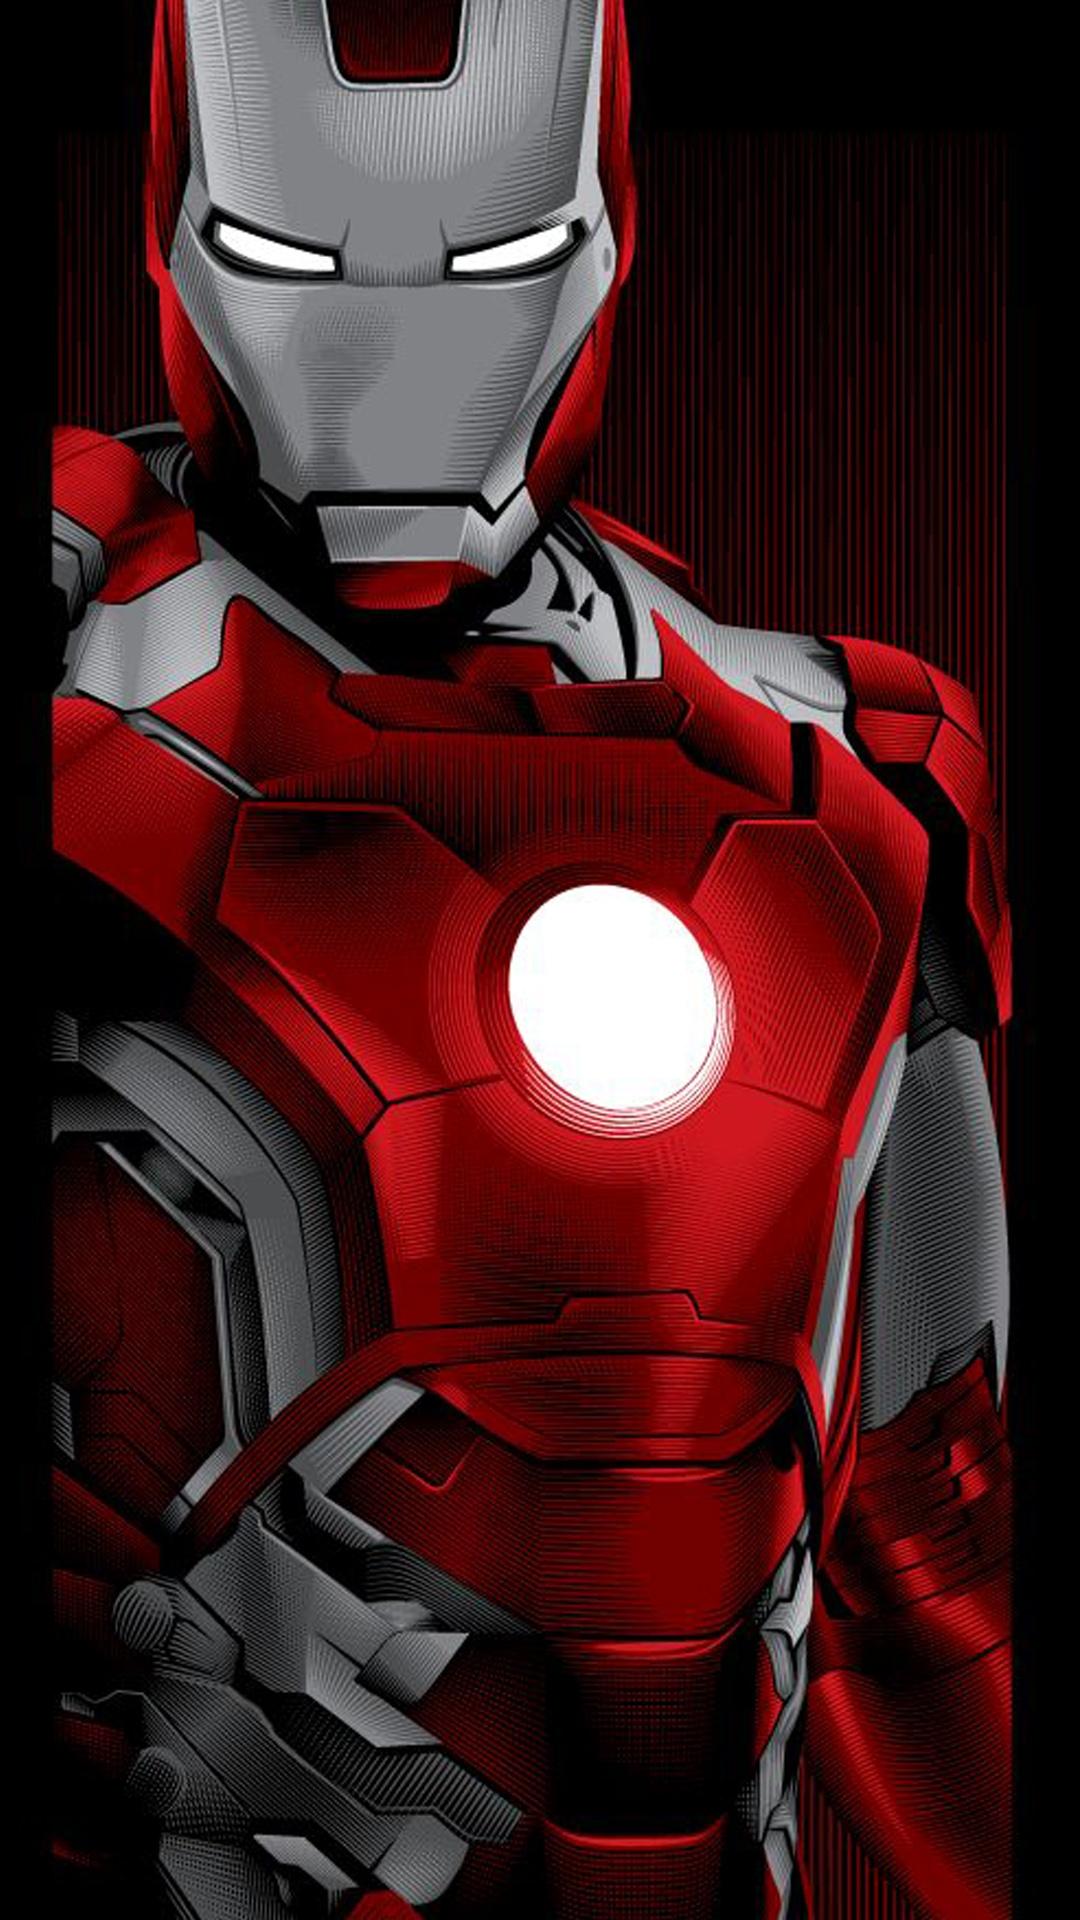 1080 x 1920 · jpeg - Iron Man Wallpaper Iron Man Iphone Wallpaper Iron Man iPhone Wallpapers ...